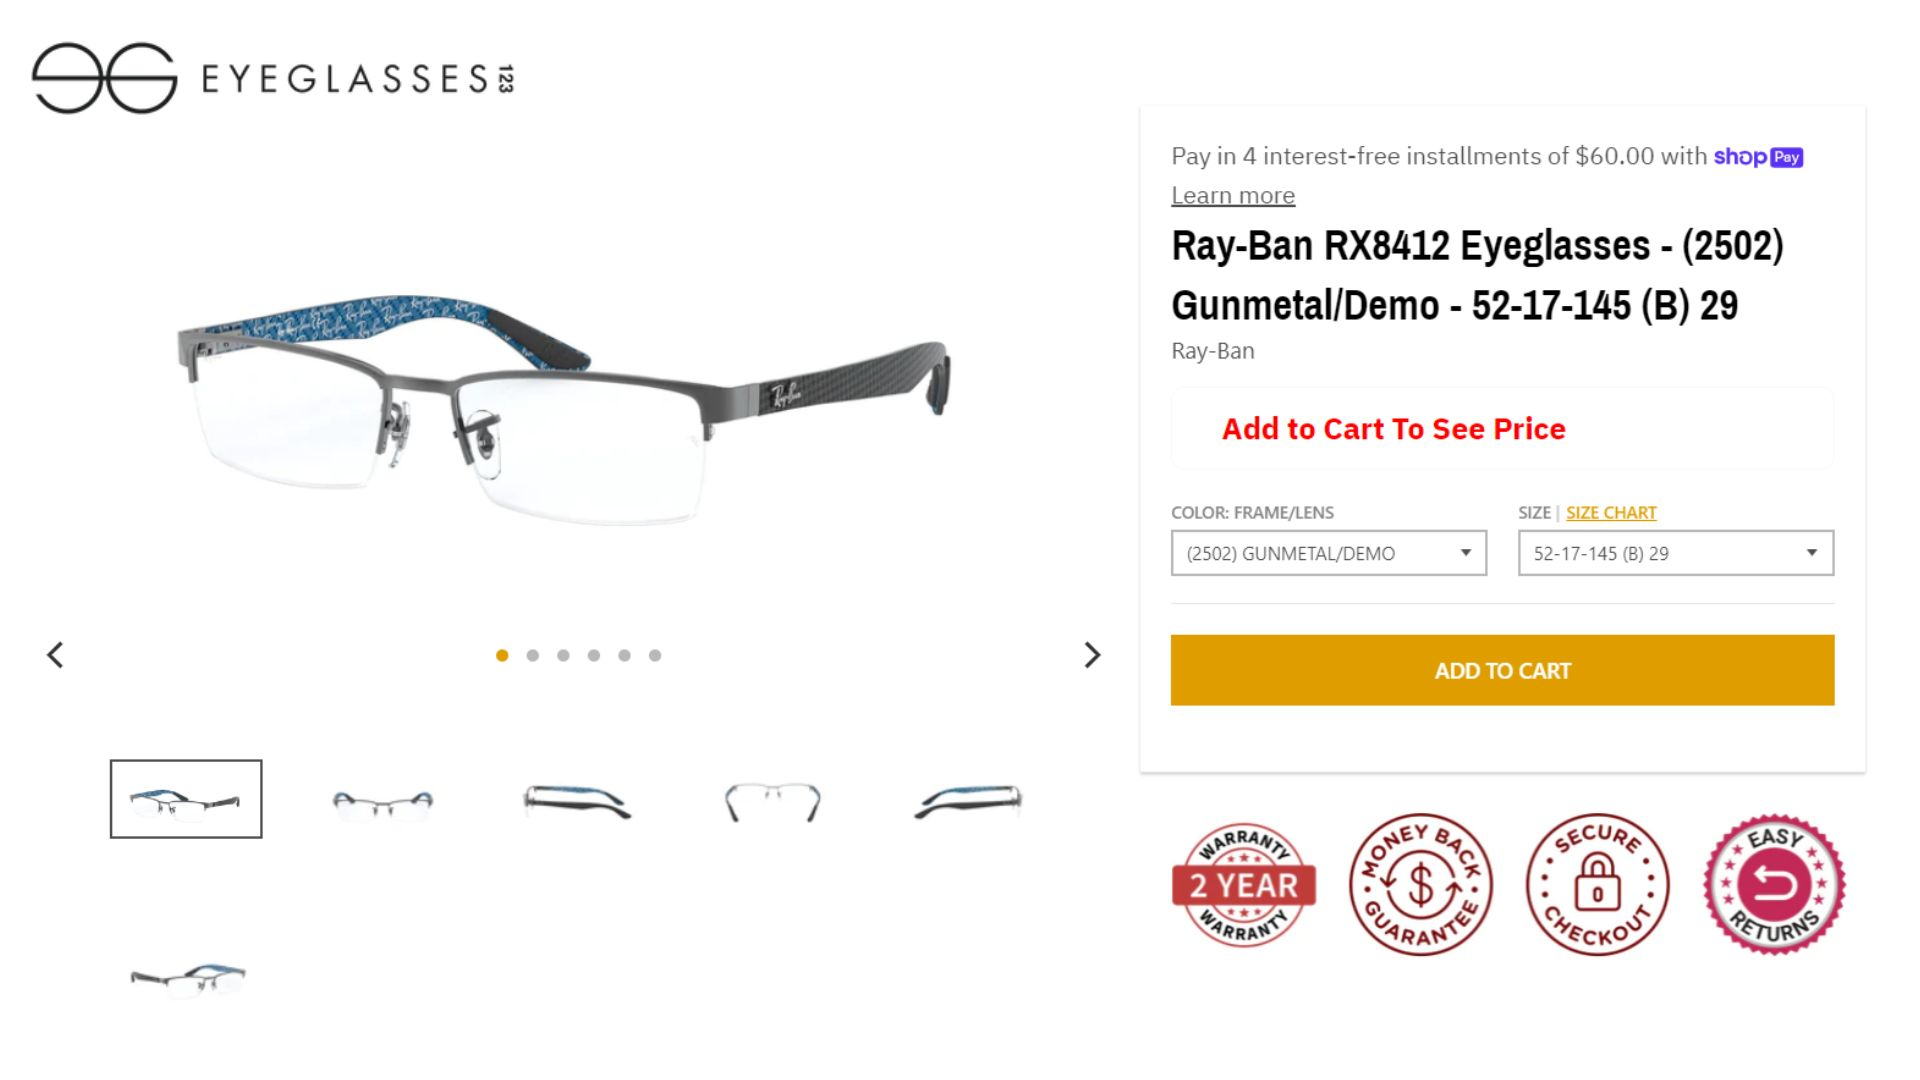 Where Are Ray-Ban Eyeglasses Made? | Eyeglasses123.com